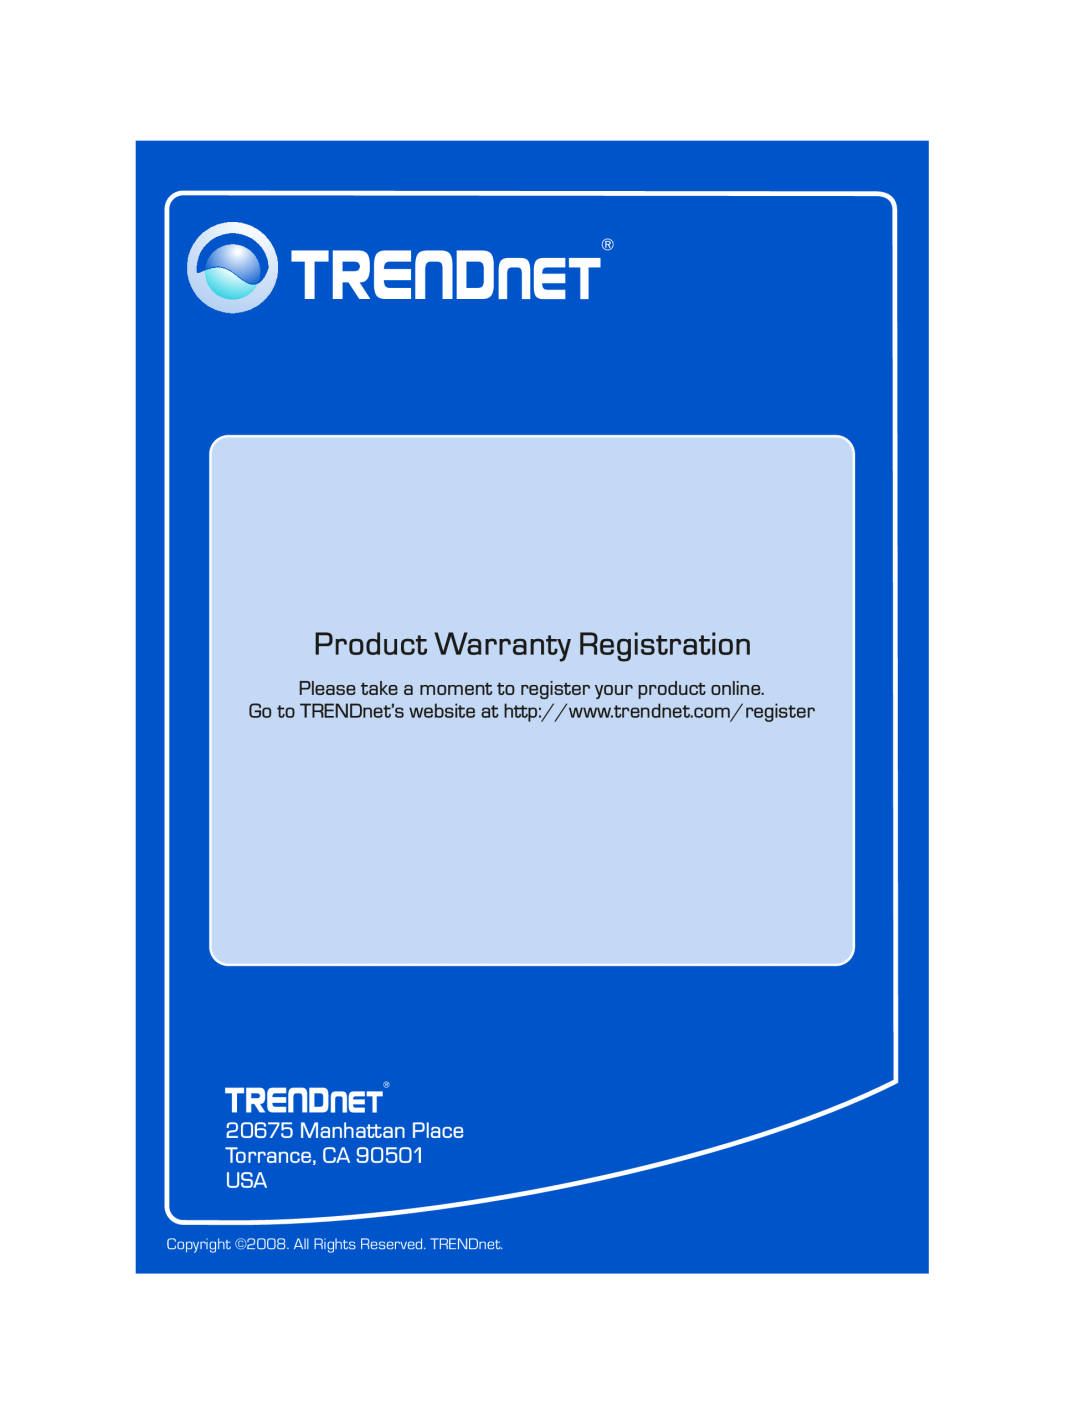 TRENDnet Multi-Function Printer manual Manhattan Place Torrance, CA USA, Product Warranty Registration 